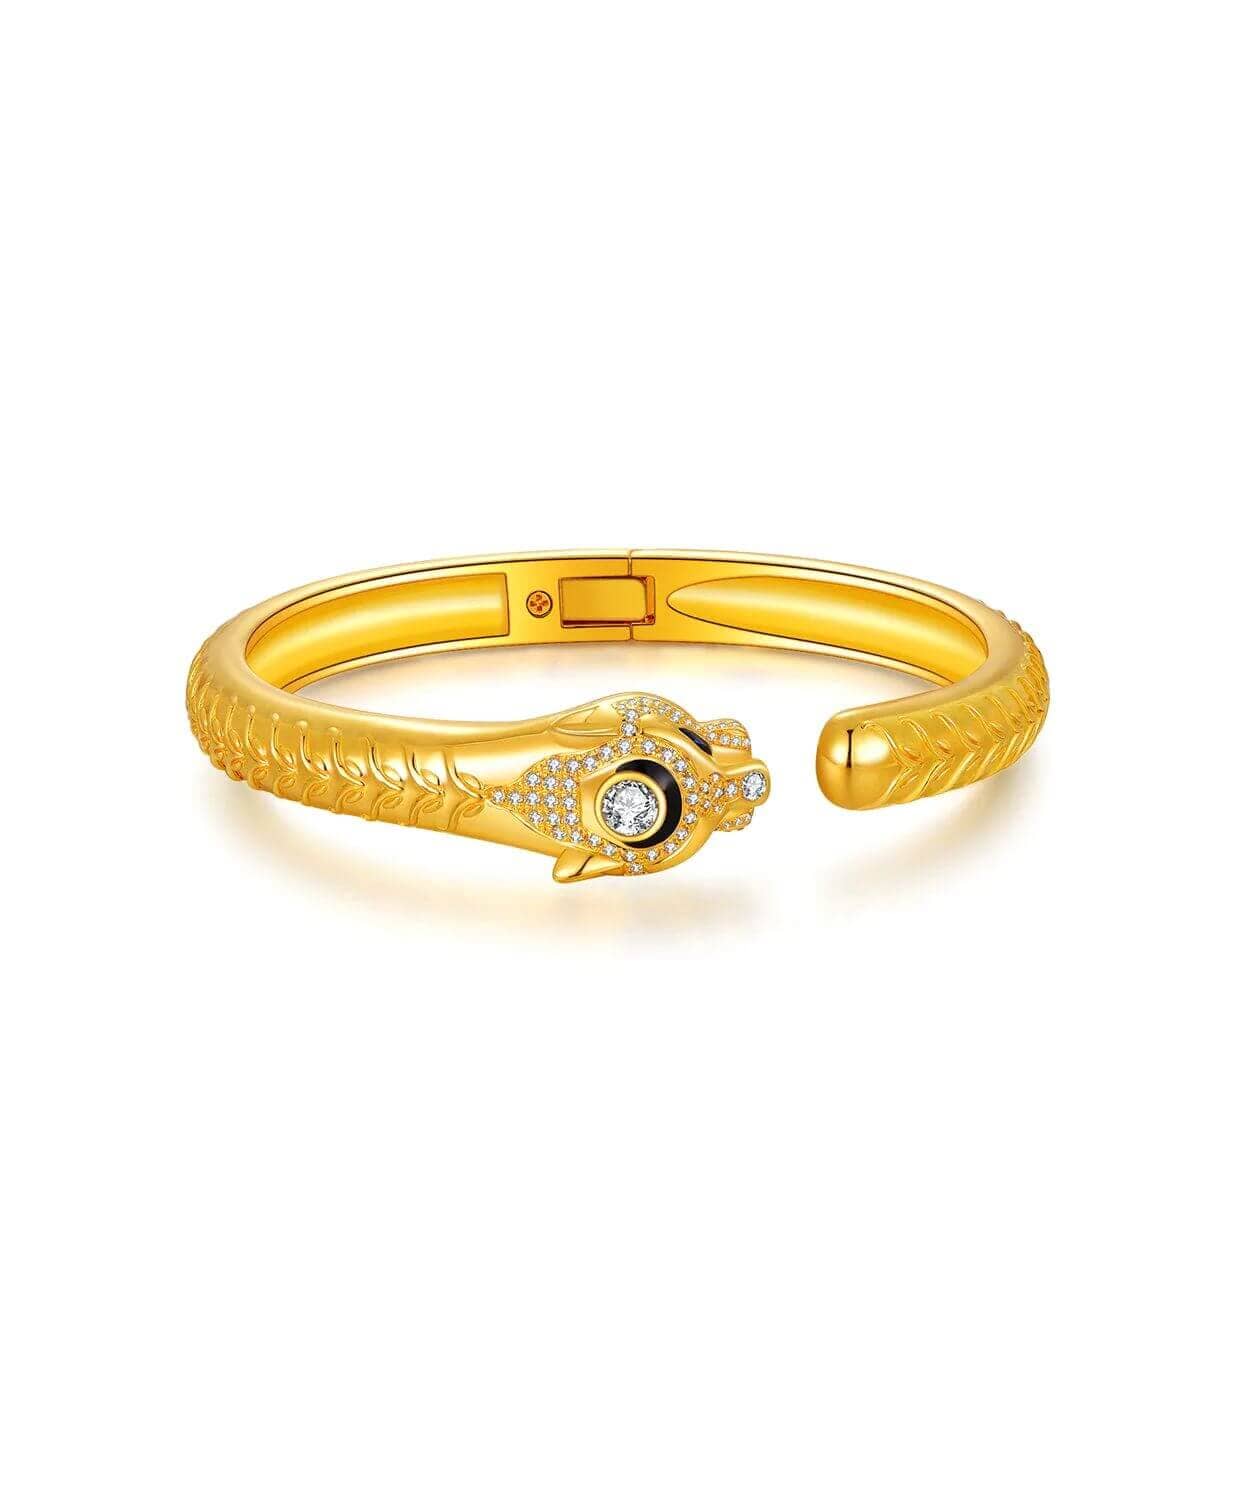 Cartier Leopard Bracelet: A 24k Gold Filled History